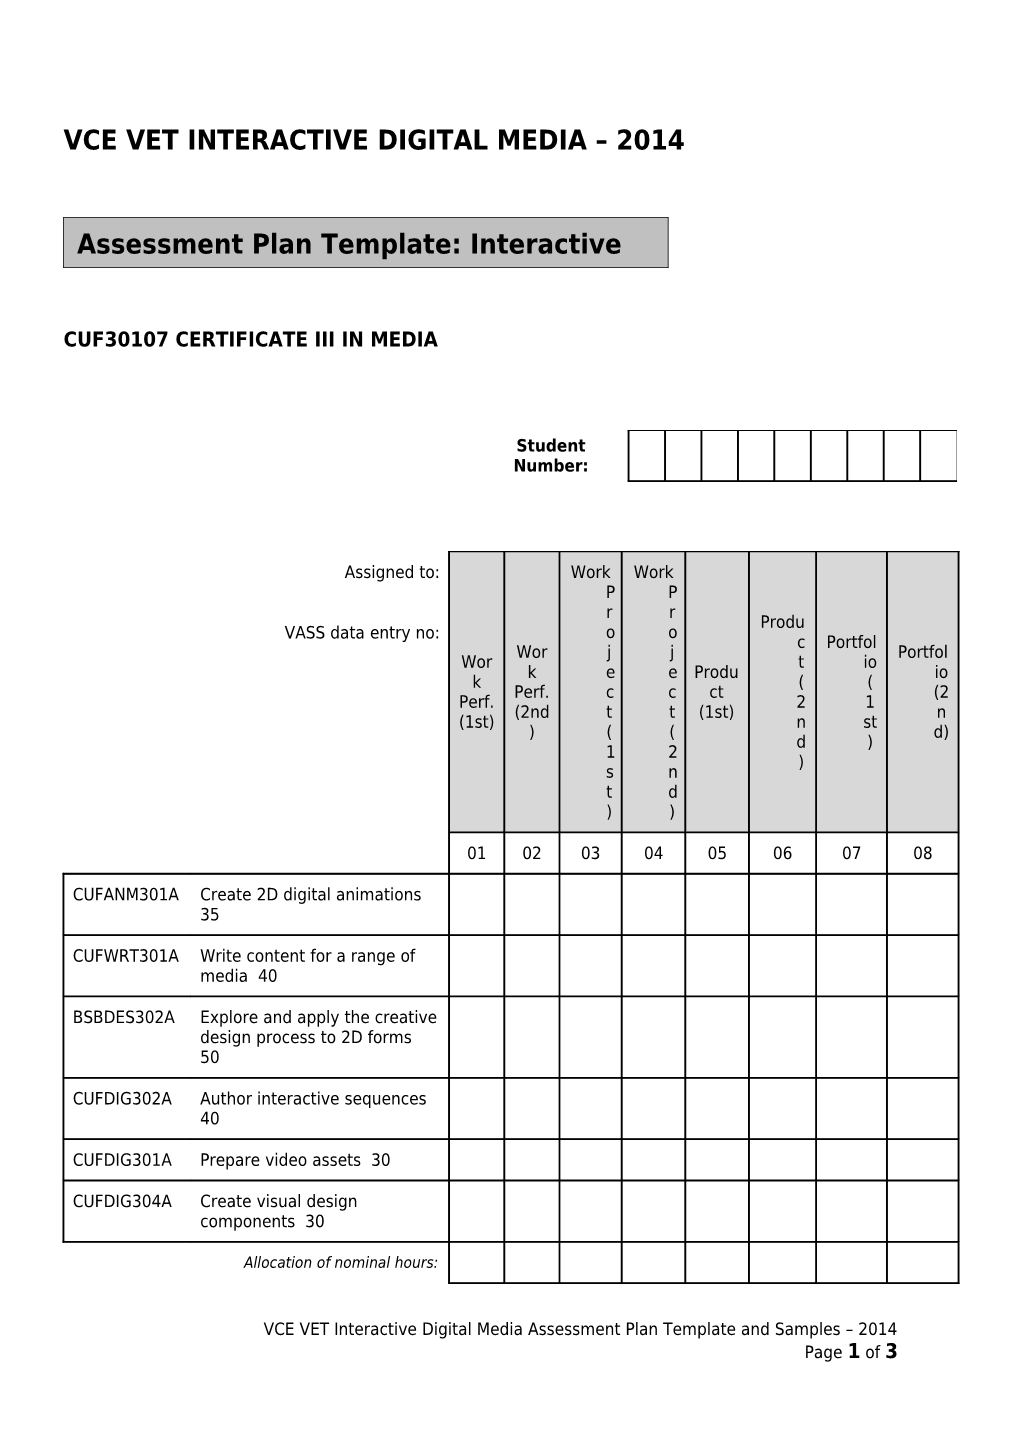 VCE VET Interactive Digital Media - Assessment Plan - Template and Sample